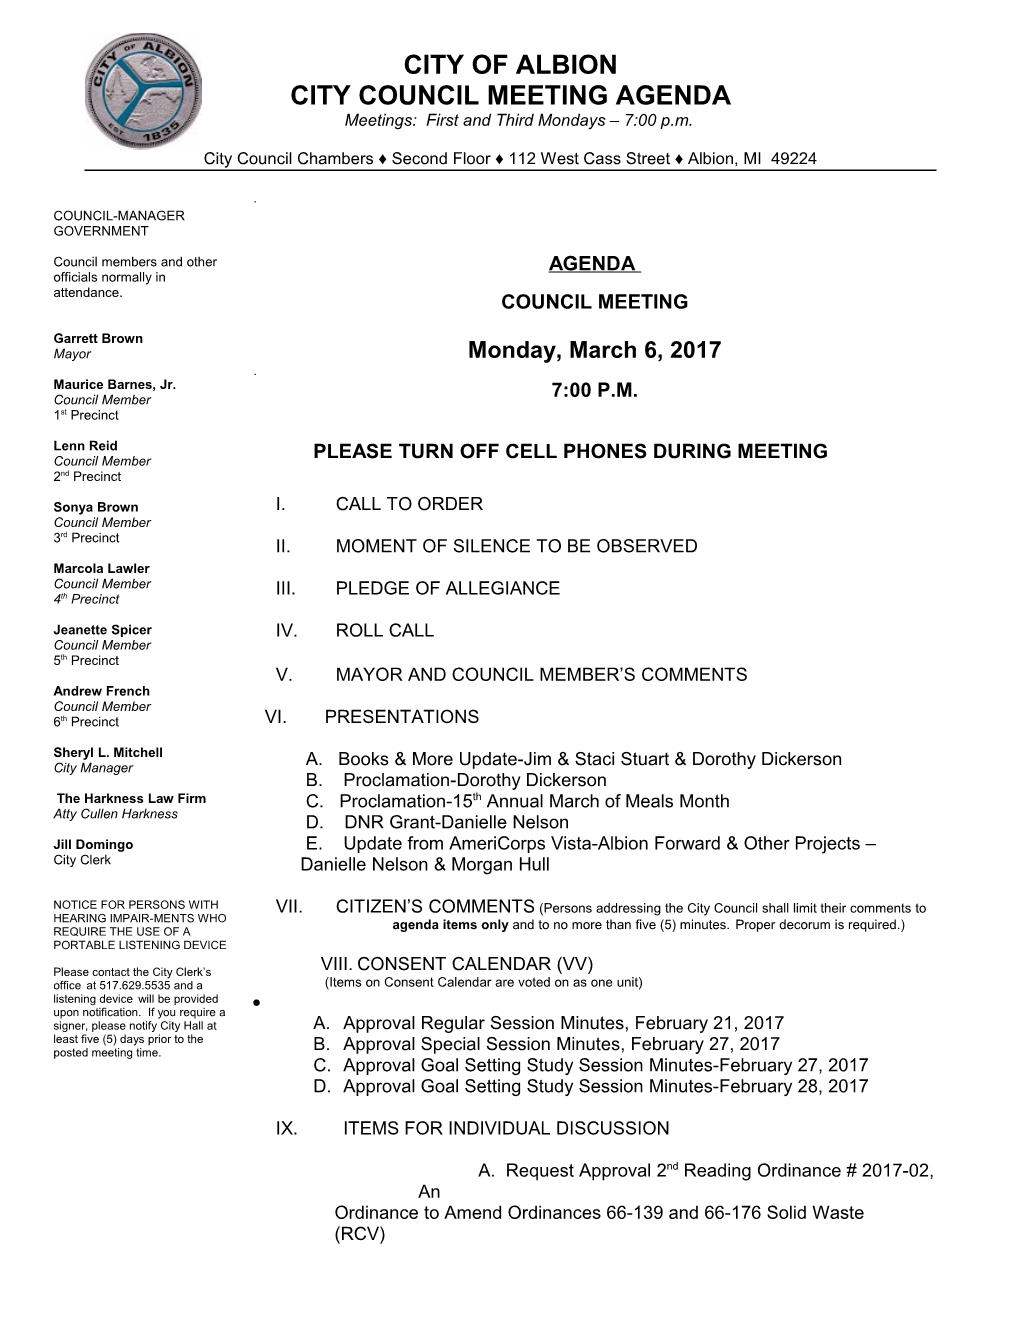 City Council Meeting Agenda s1